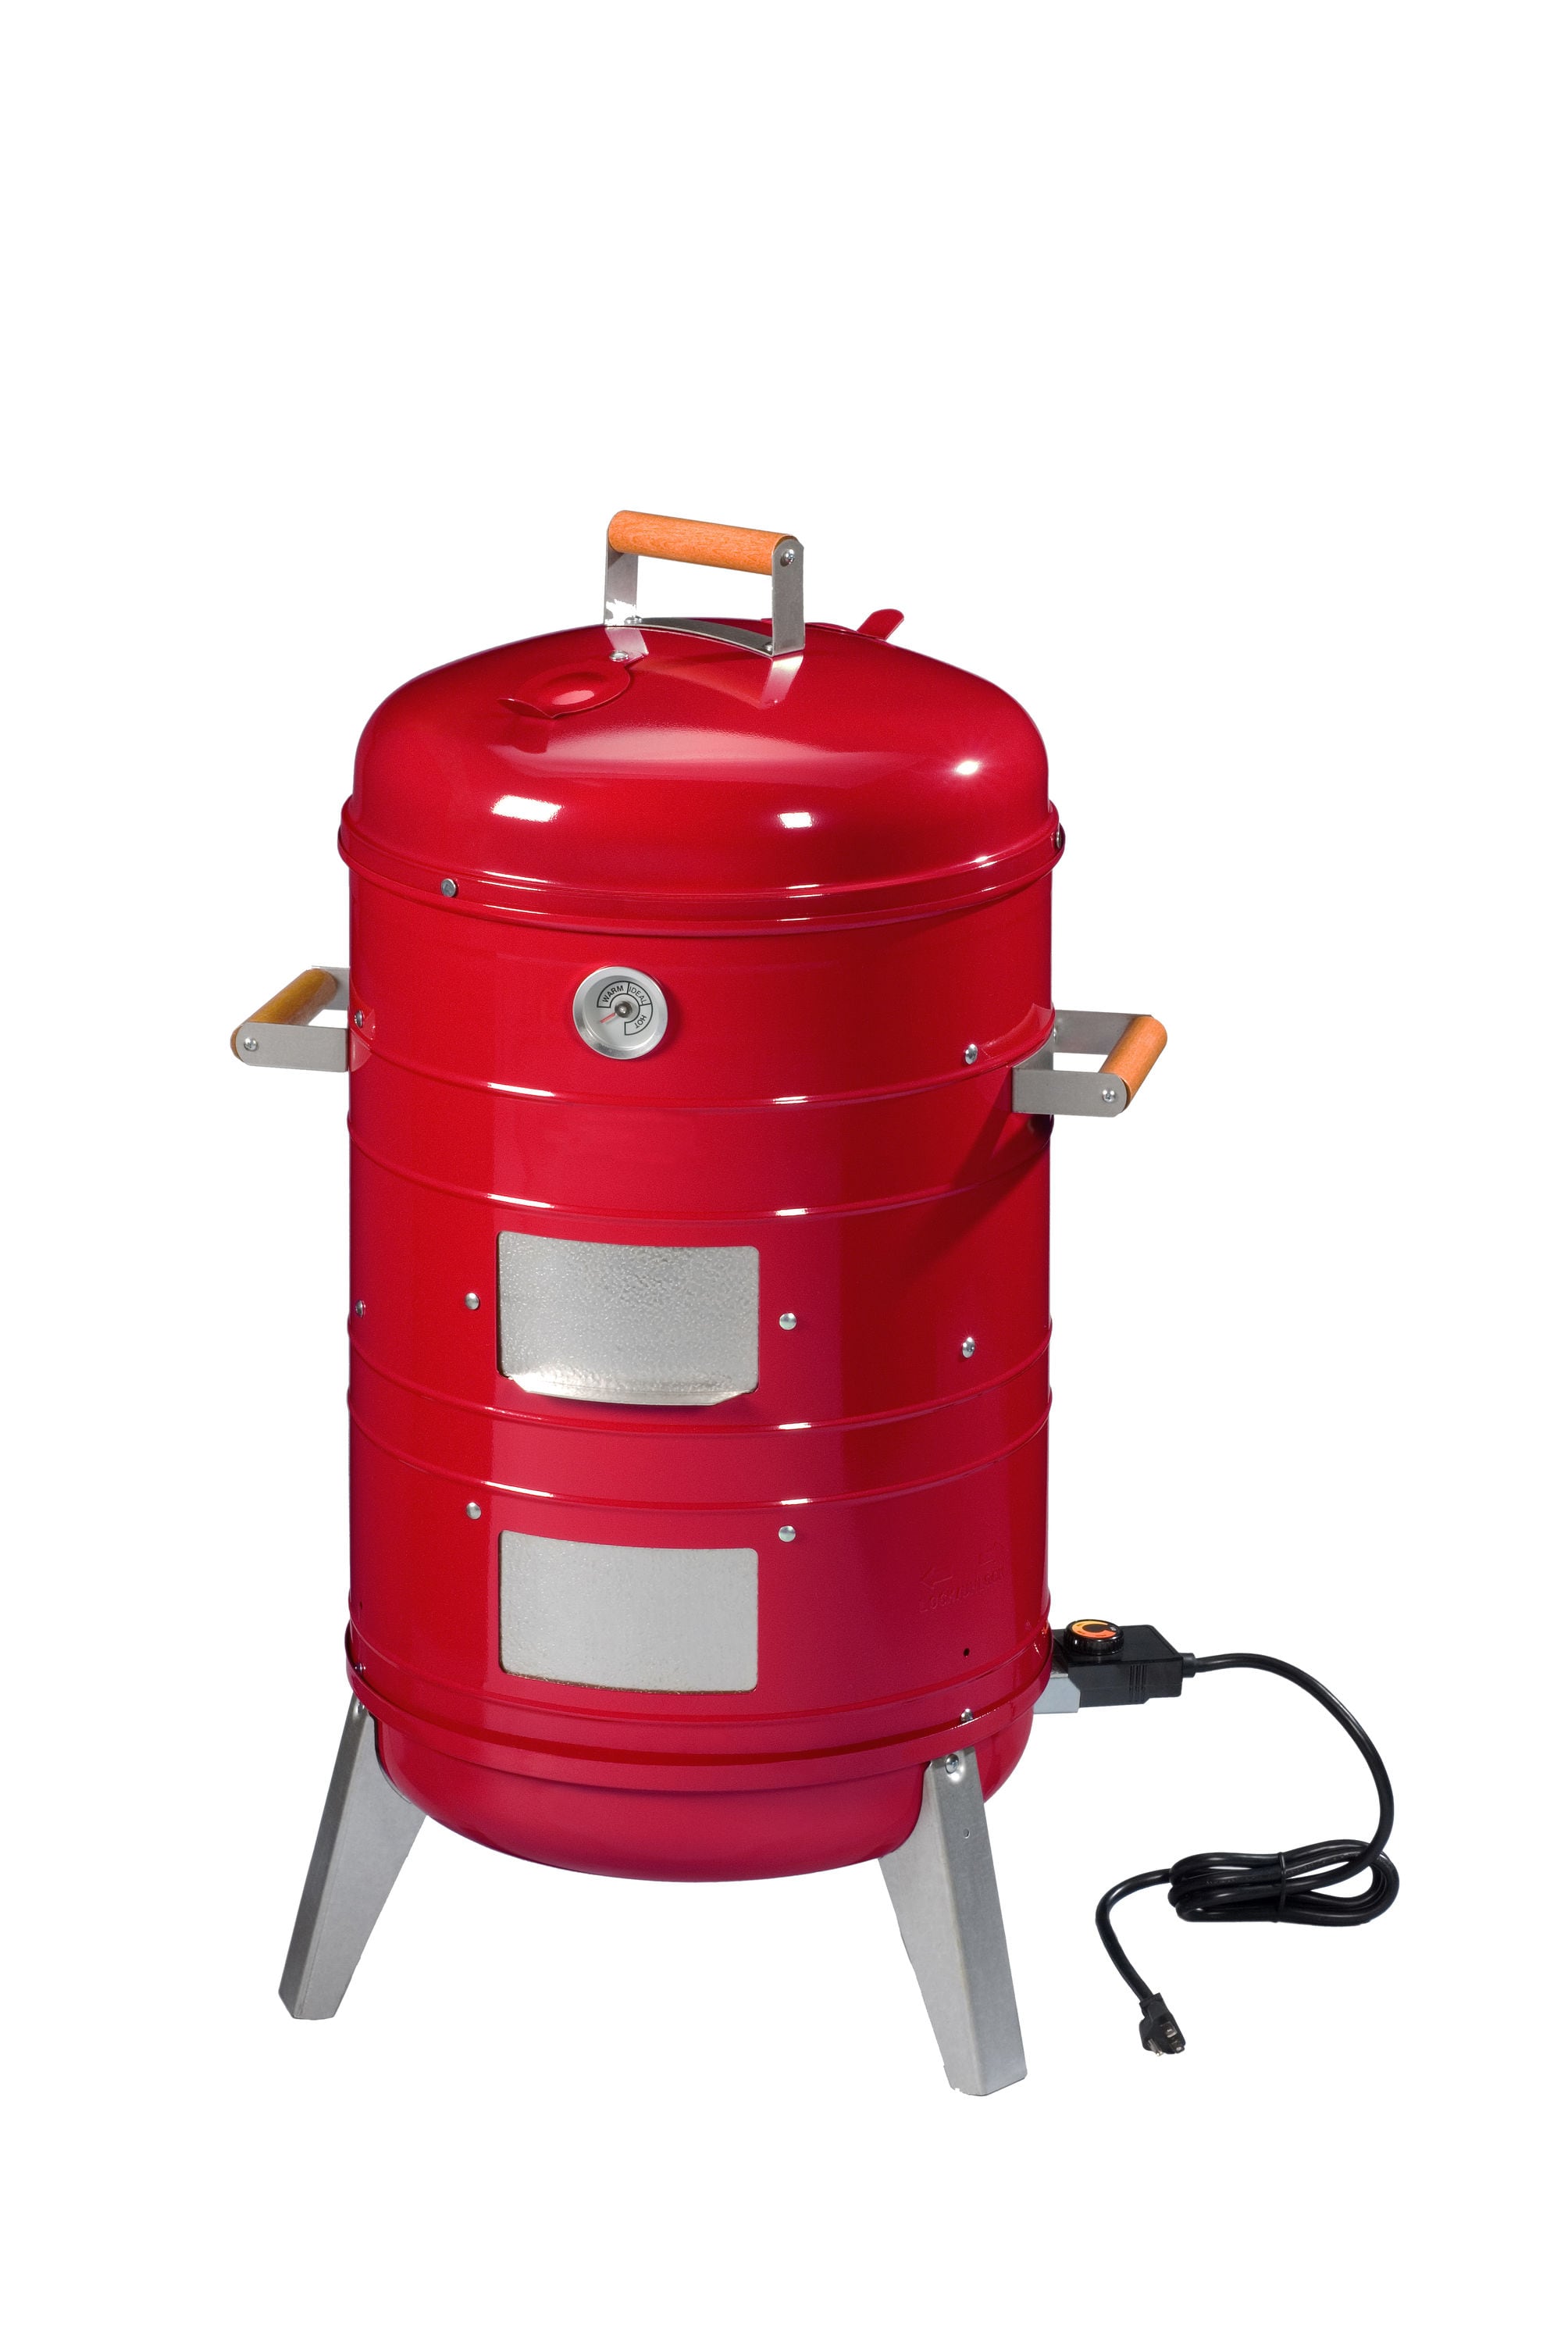 2-In-1 Electric Combination Water Smoker with 1500Watt Heating